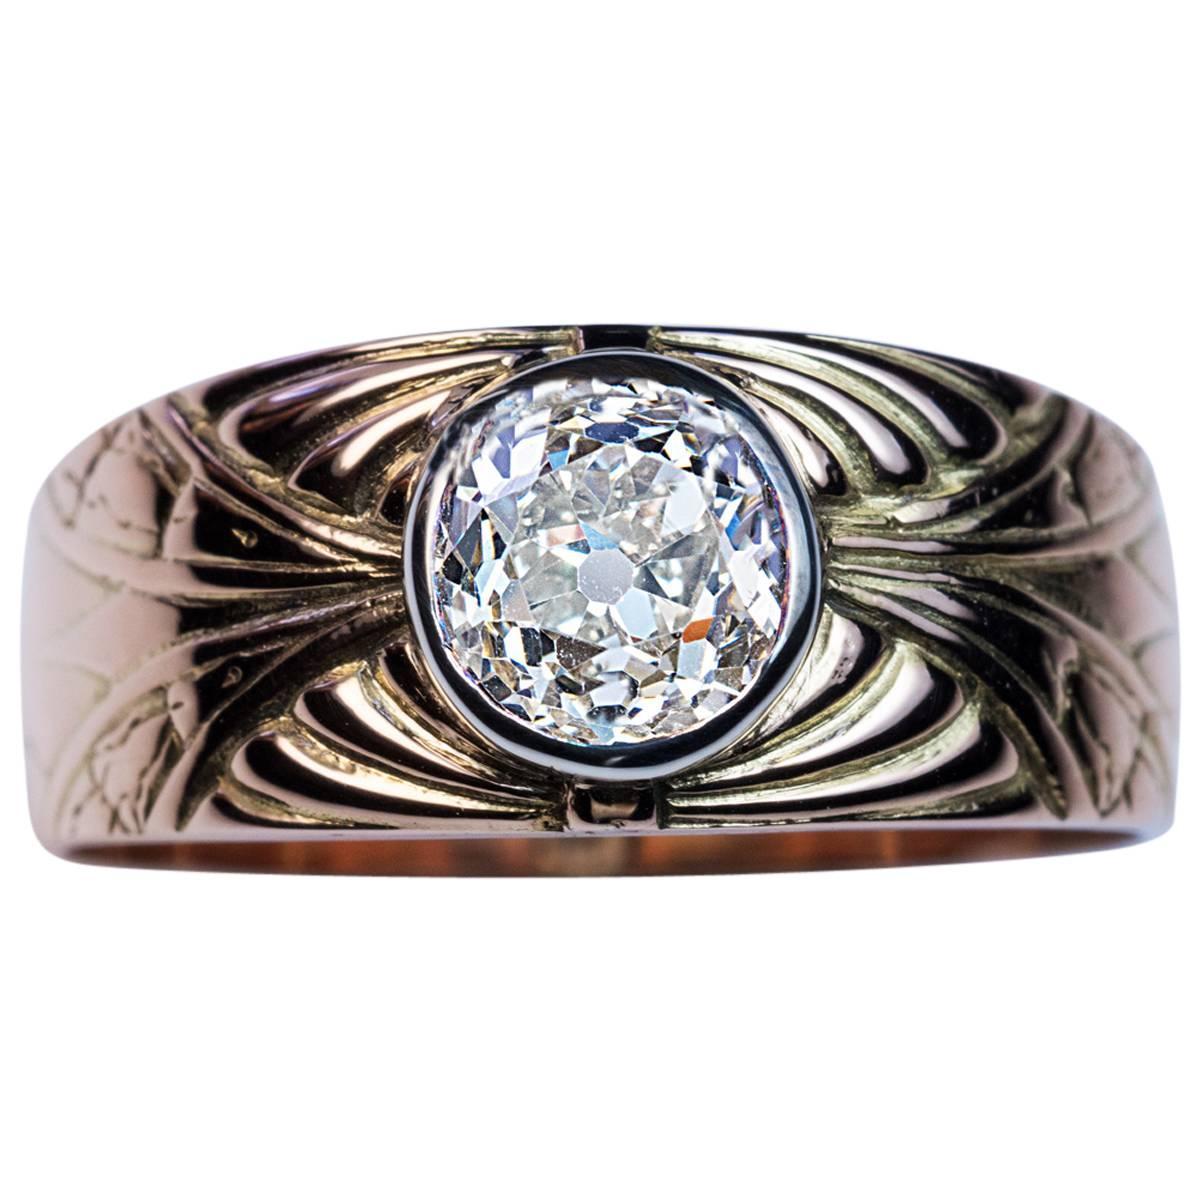 Antique Diamond Gold Carved Men's Ring For Sale at 1stdibs